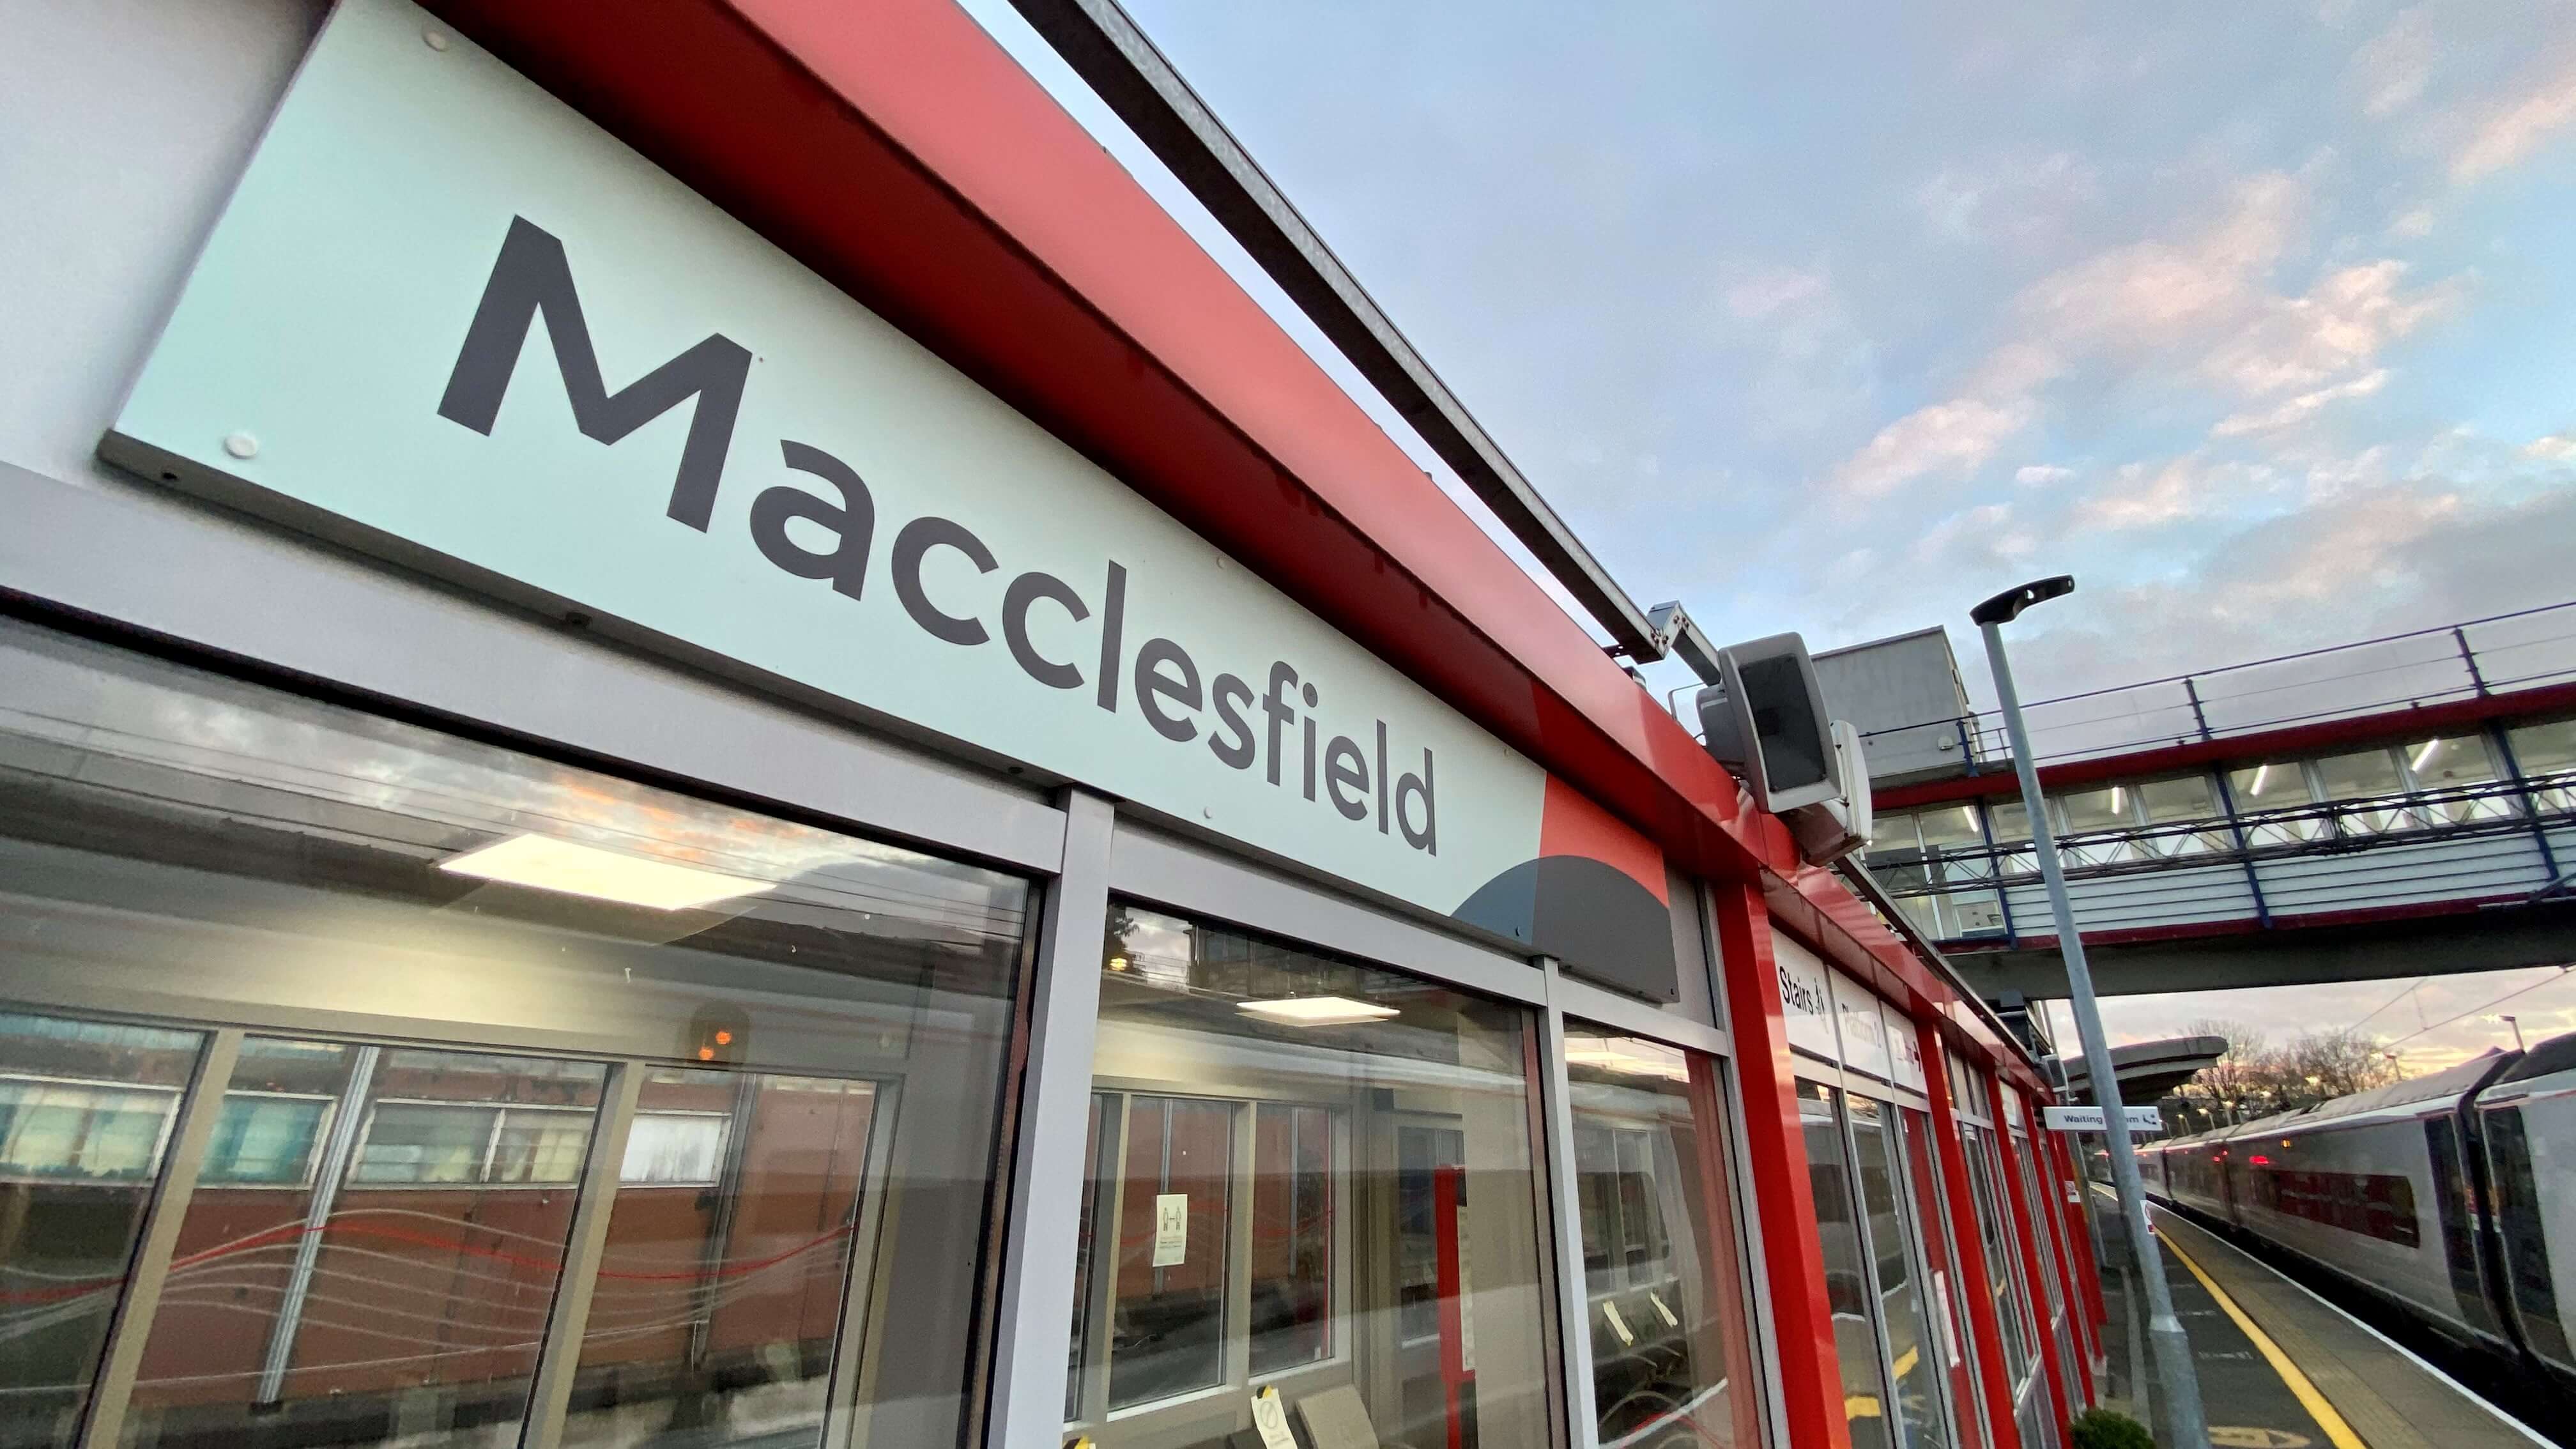 Macclesfield-station-sign.jpg